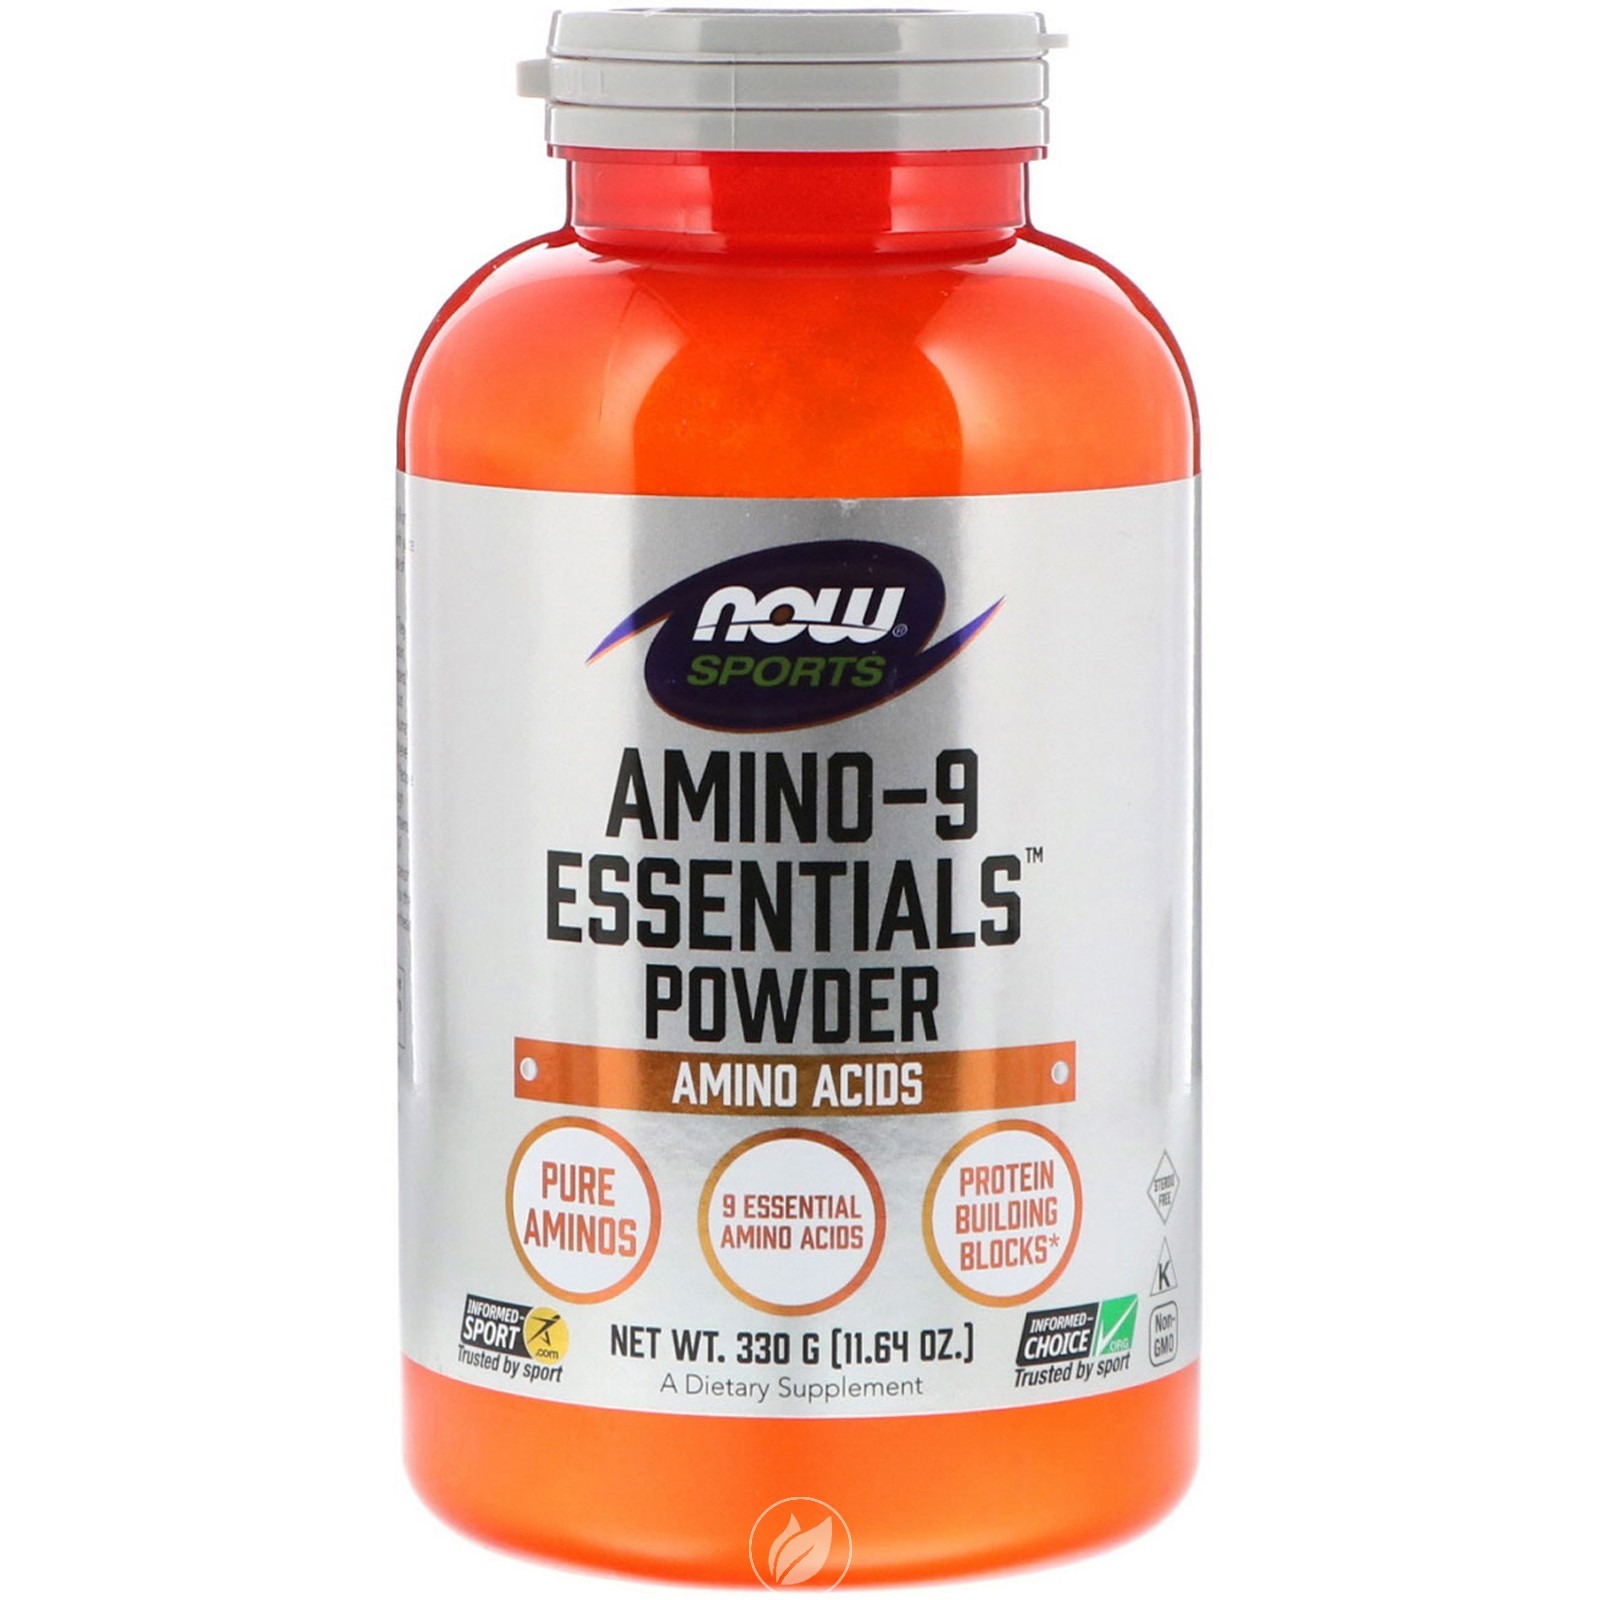 Now Sports Amino-9 Essentials Powder